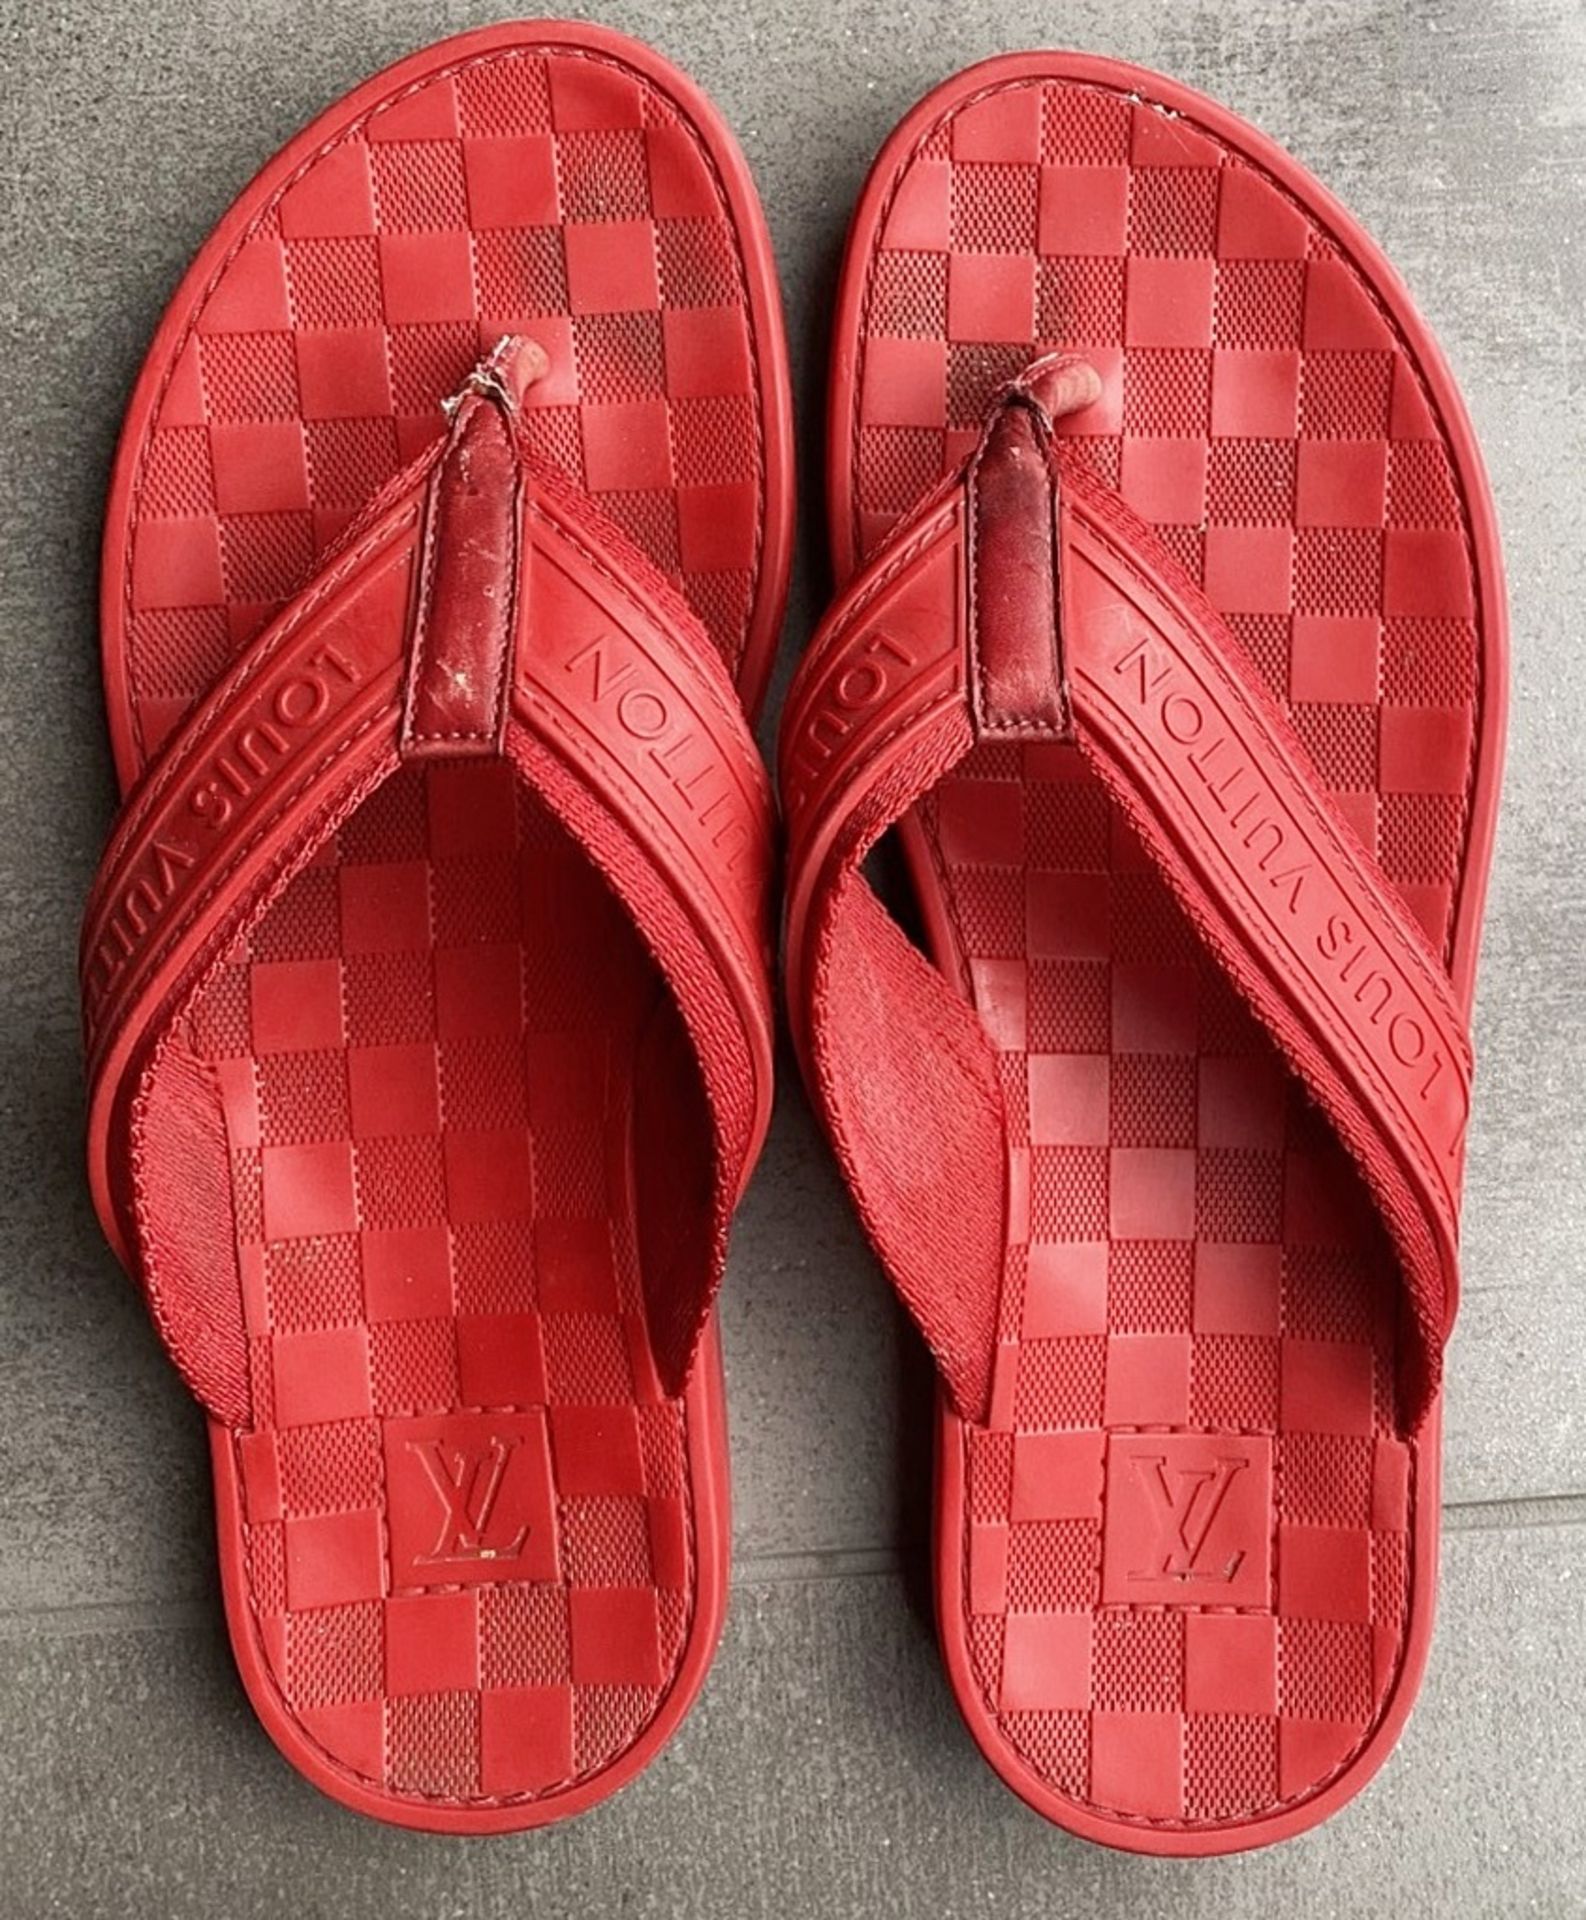 1 x Pair Of Men's Genuine Louis Vuitton Flip Flops In Red - Size Approx: 42 - Original RRP £350.00